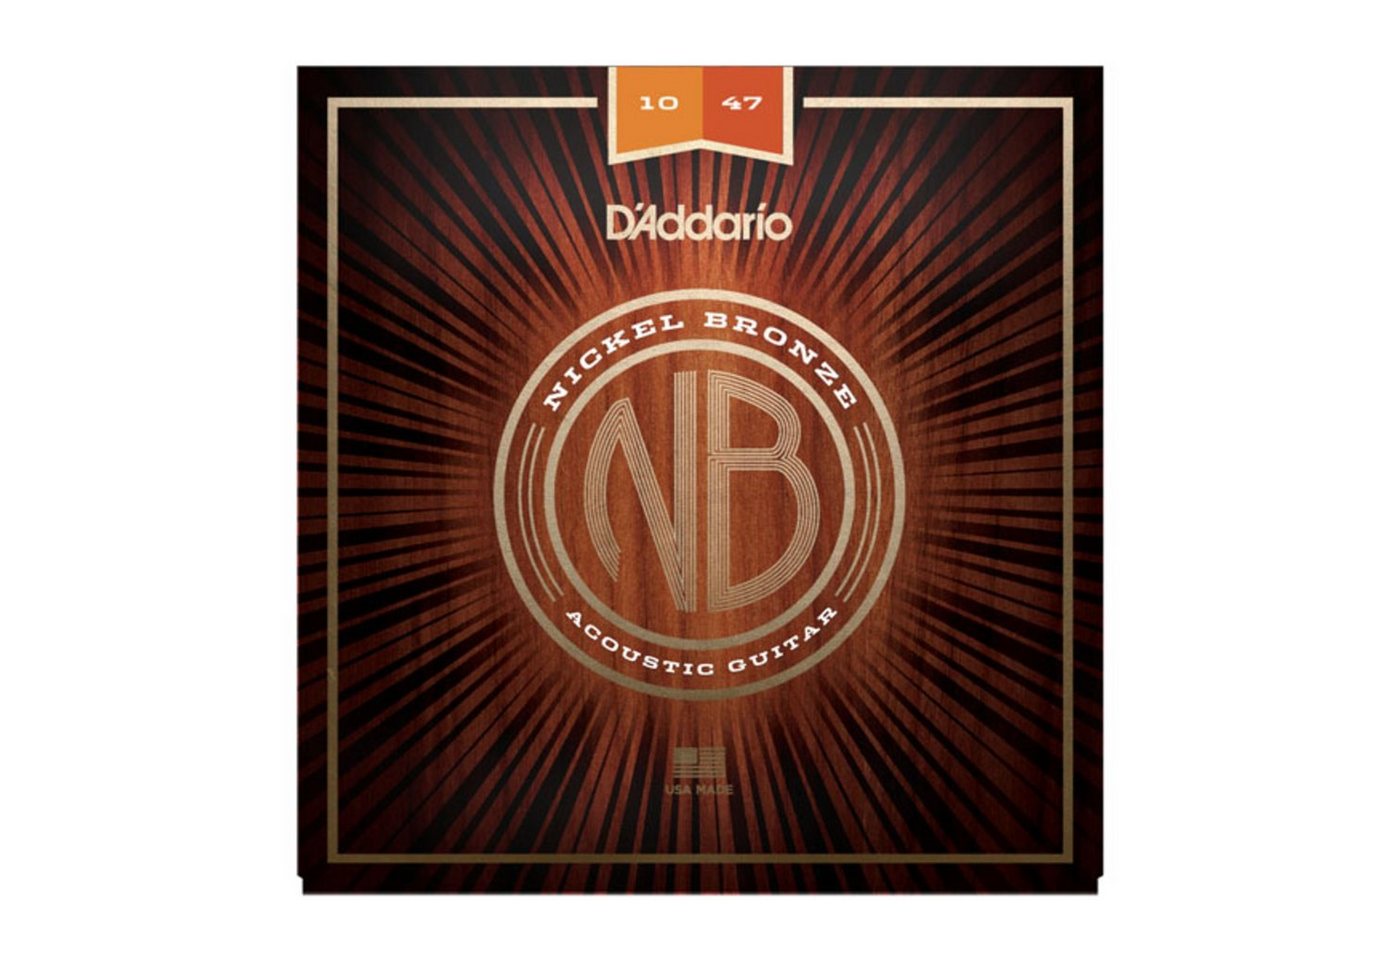 Daddario Saiten, (NB1047 10-47 Nickel Bronze Acoustic Extra Light), NB1047 10-47 Nickel Bronze Acoustic Extra Light - Westerngitarrensai von Daddario